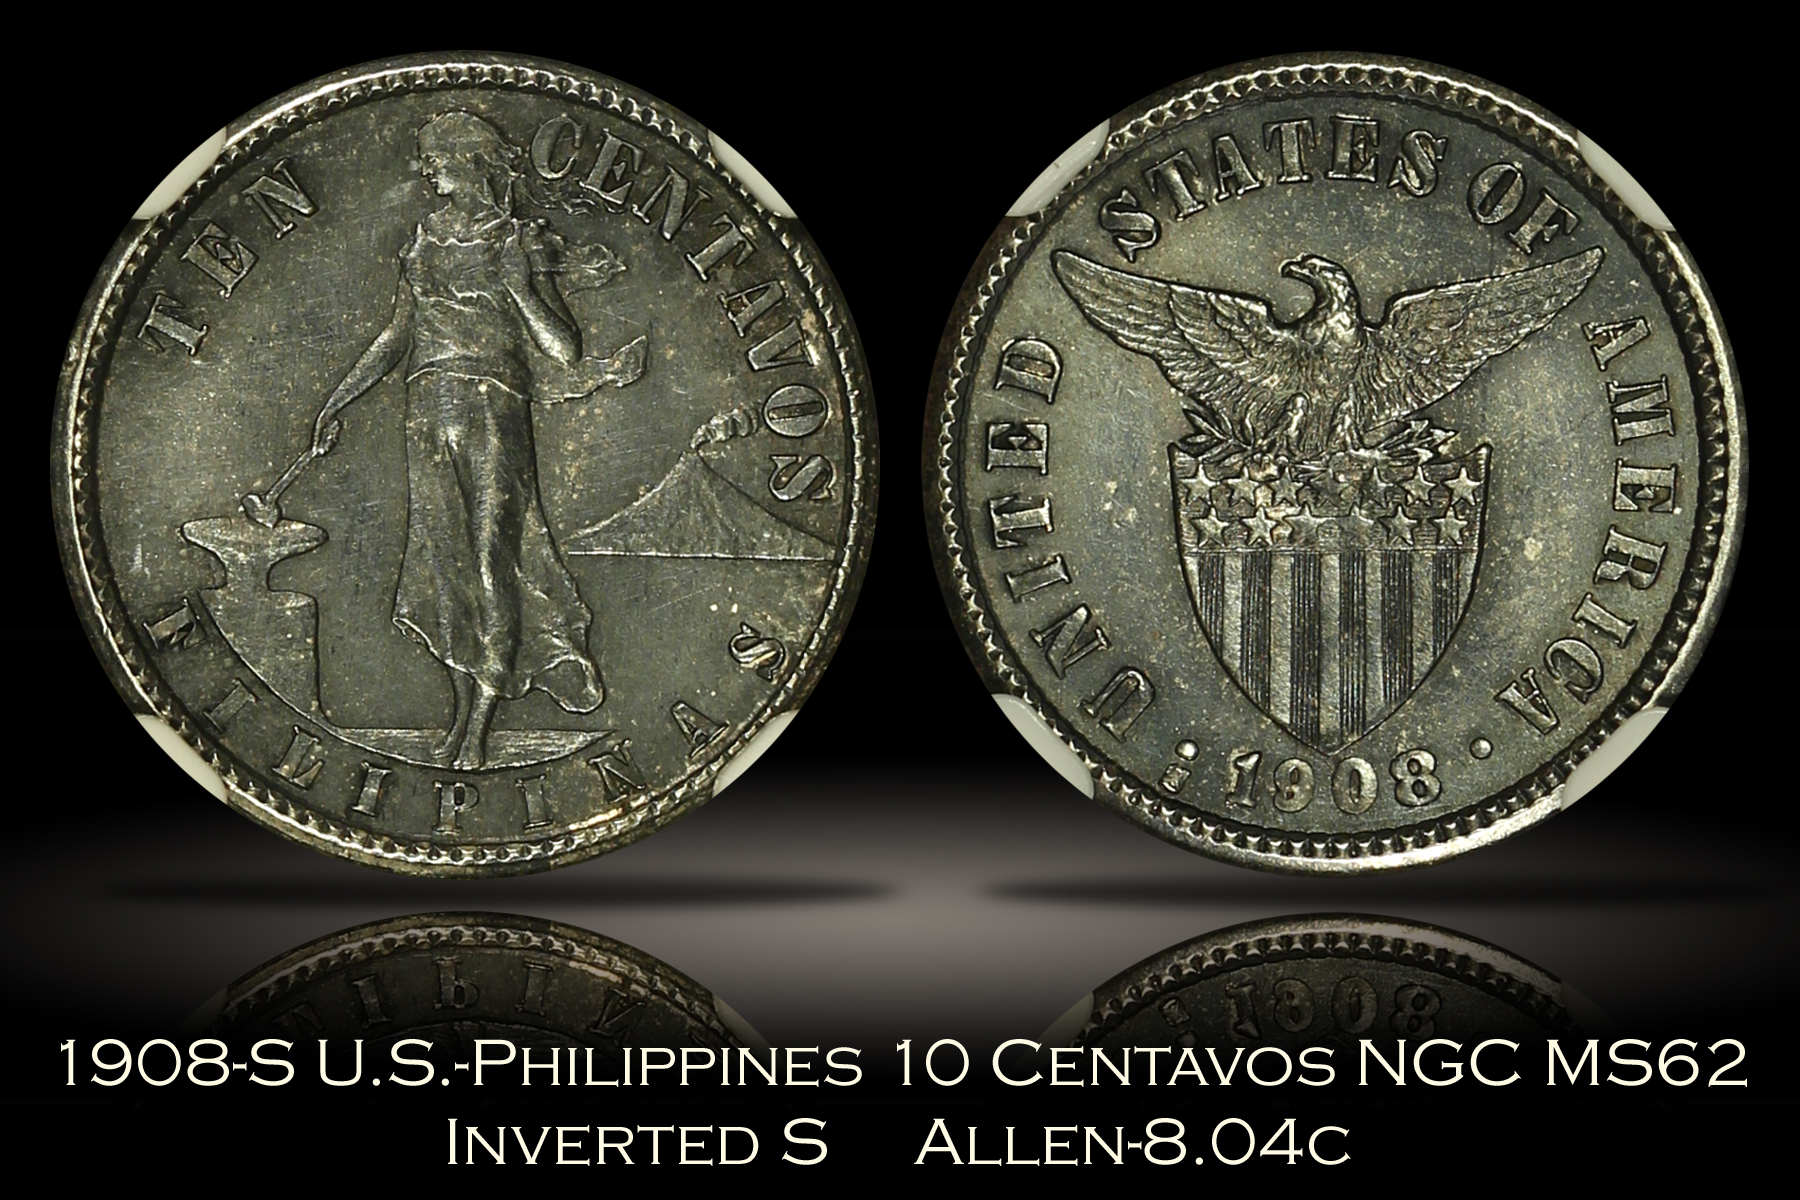 1908-S U.S.-Philippines 10 Centavos Inverted S Allen 8.04c NGC MS62